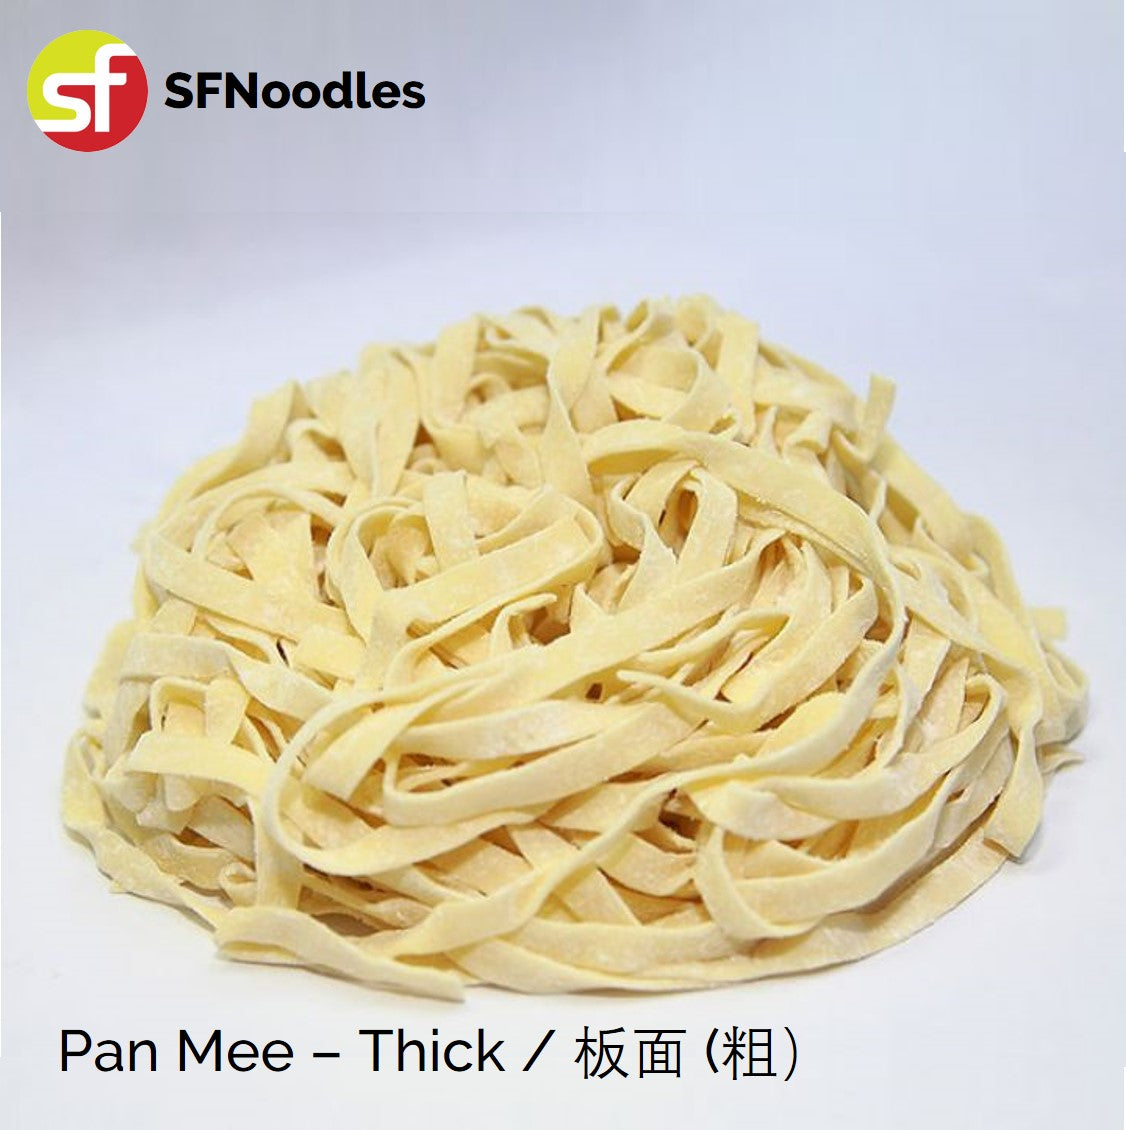 Pan Mee - Thick / Thin (Mee Hoon Kueh, 板面, 面粉粿)